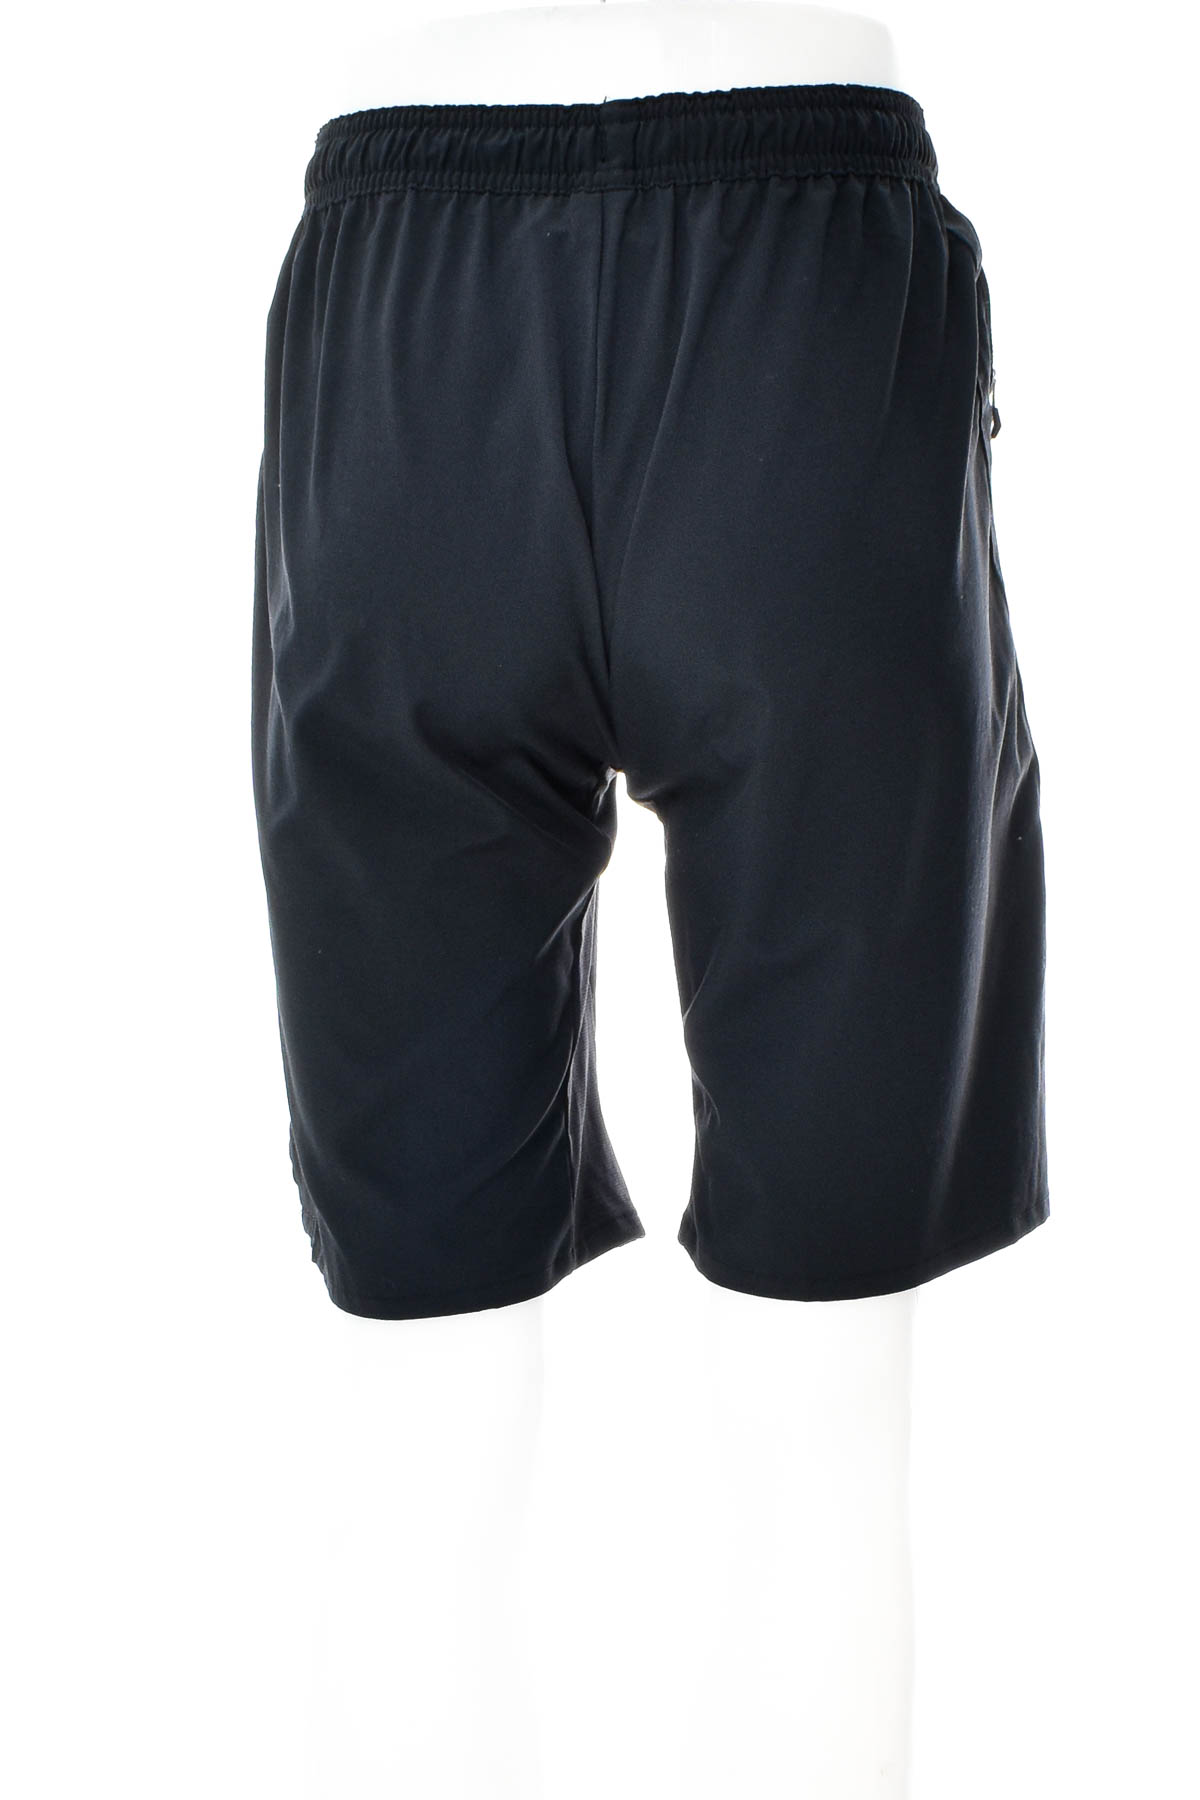 Men's shorts - Domyos - 1